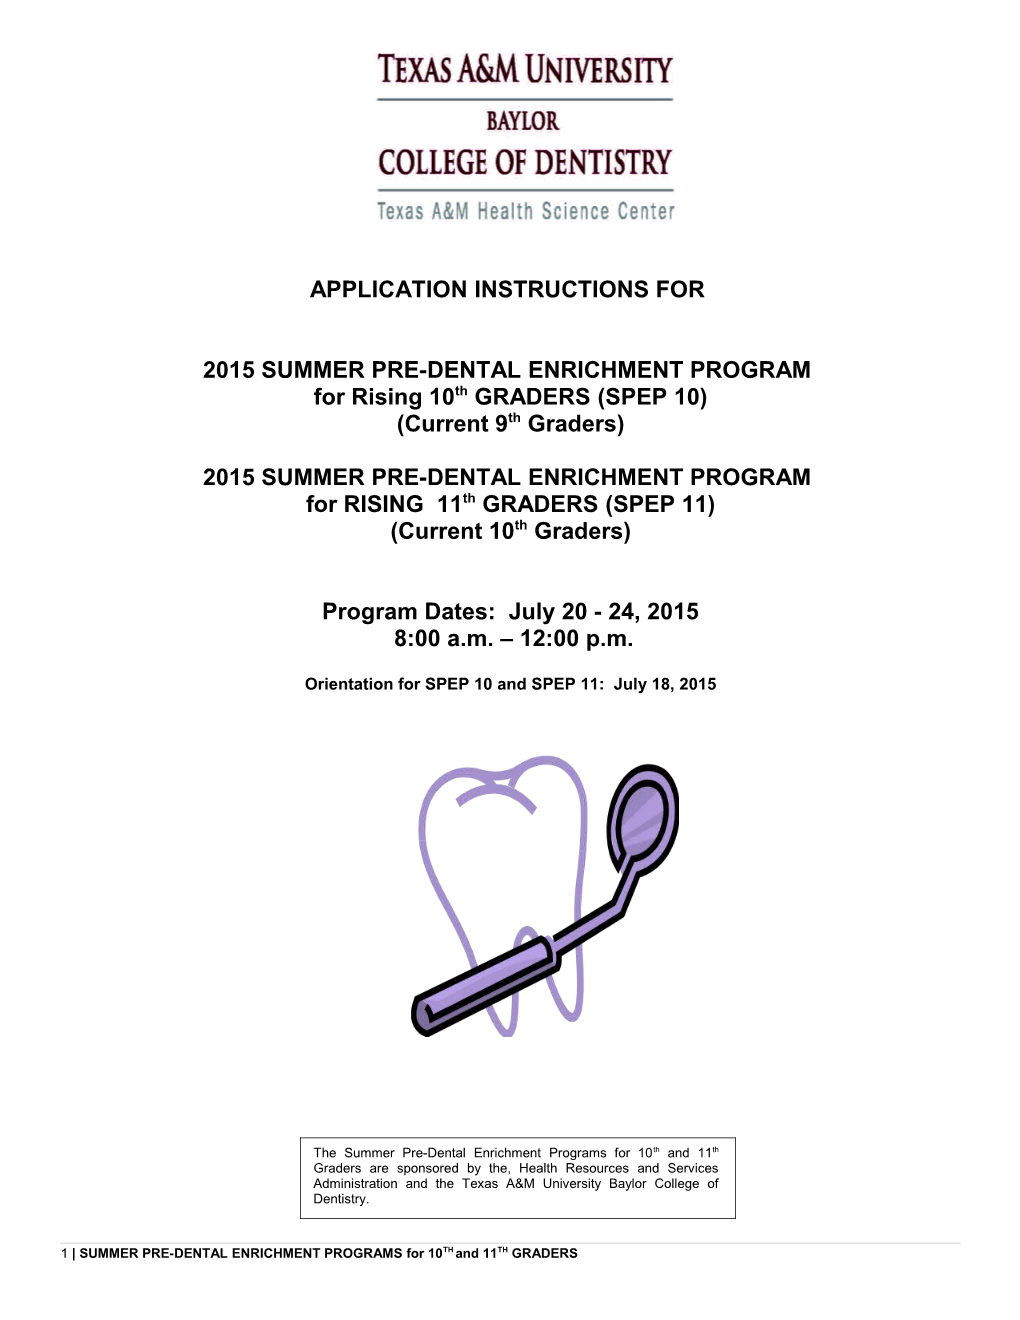 2015 Summer Pre-Dental Enrichment Program